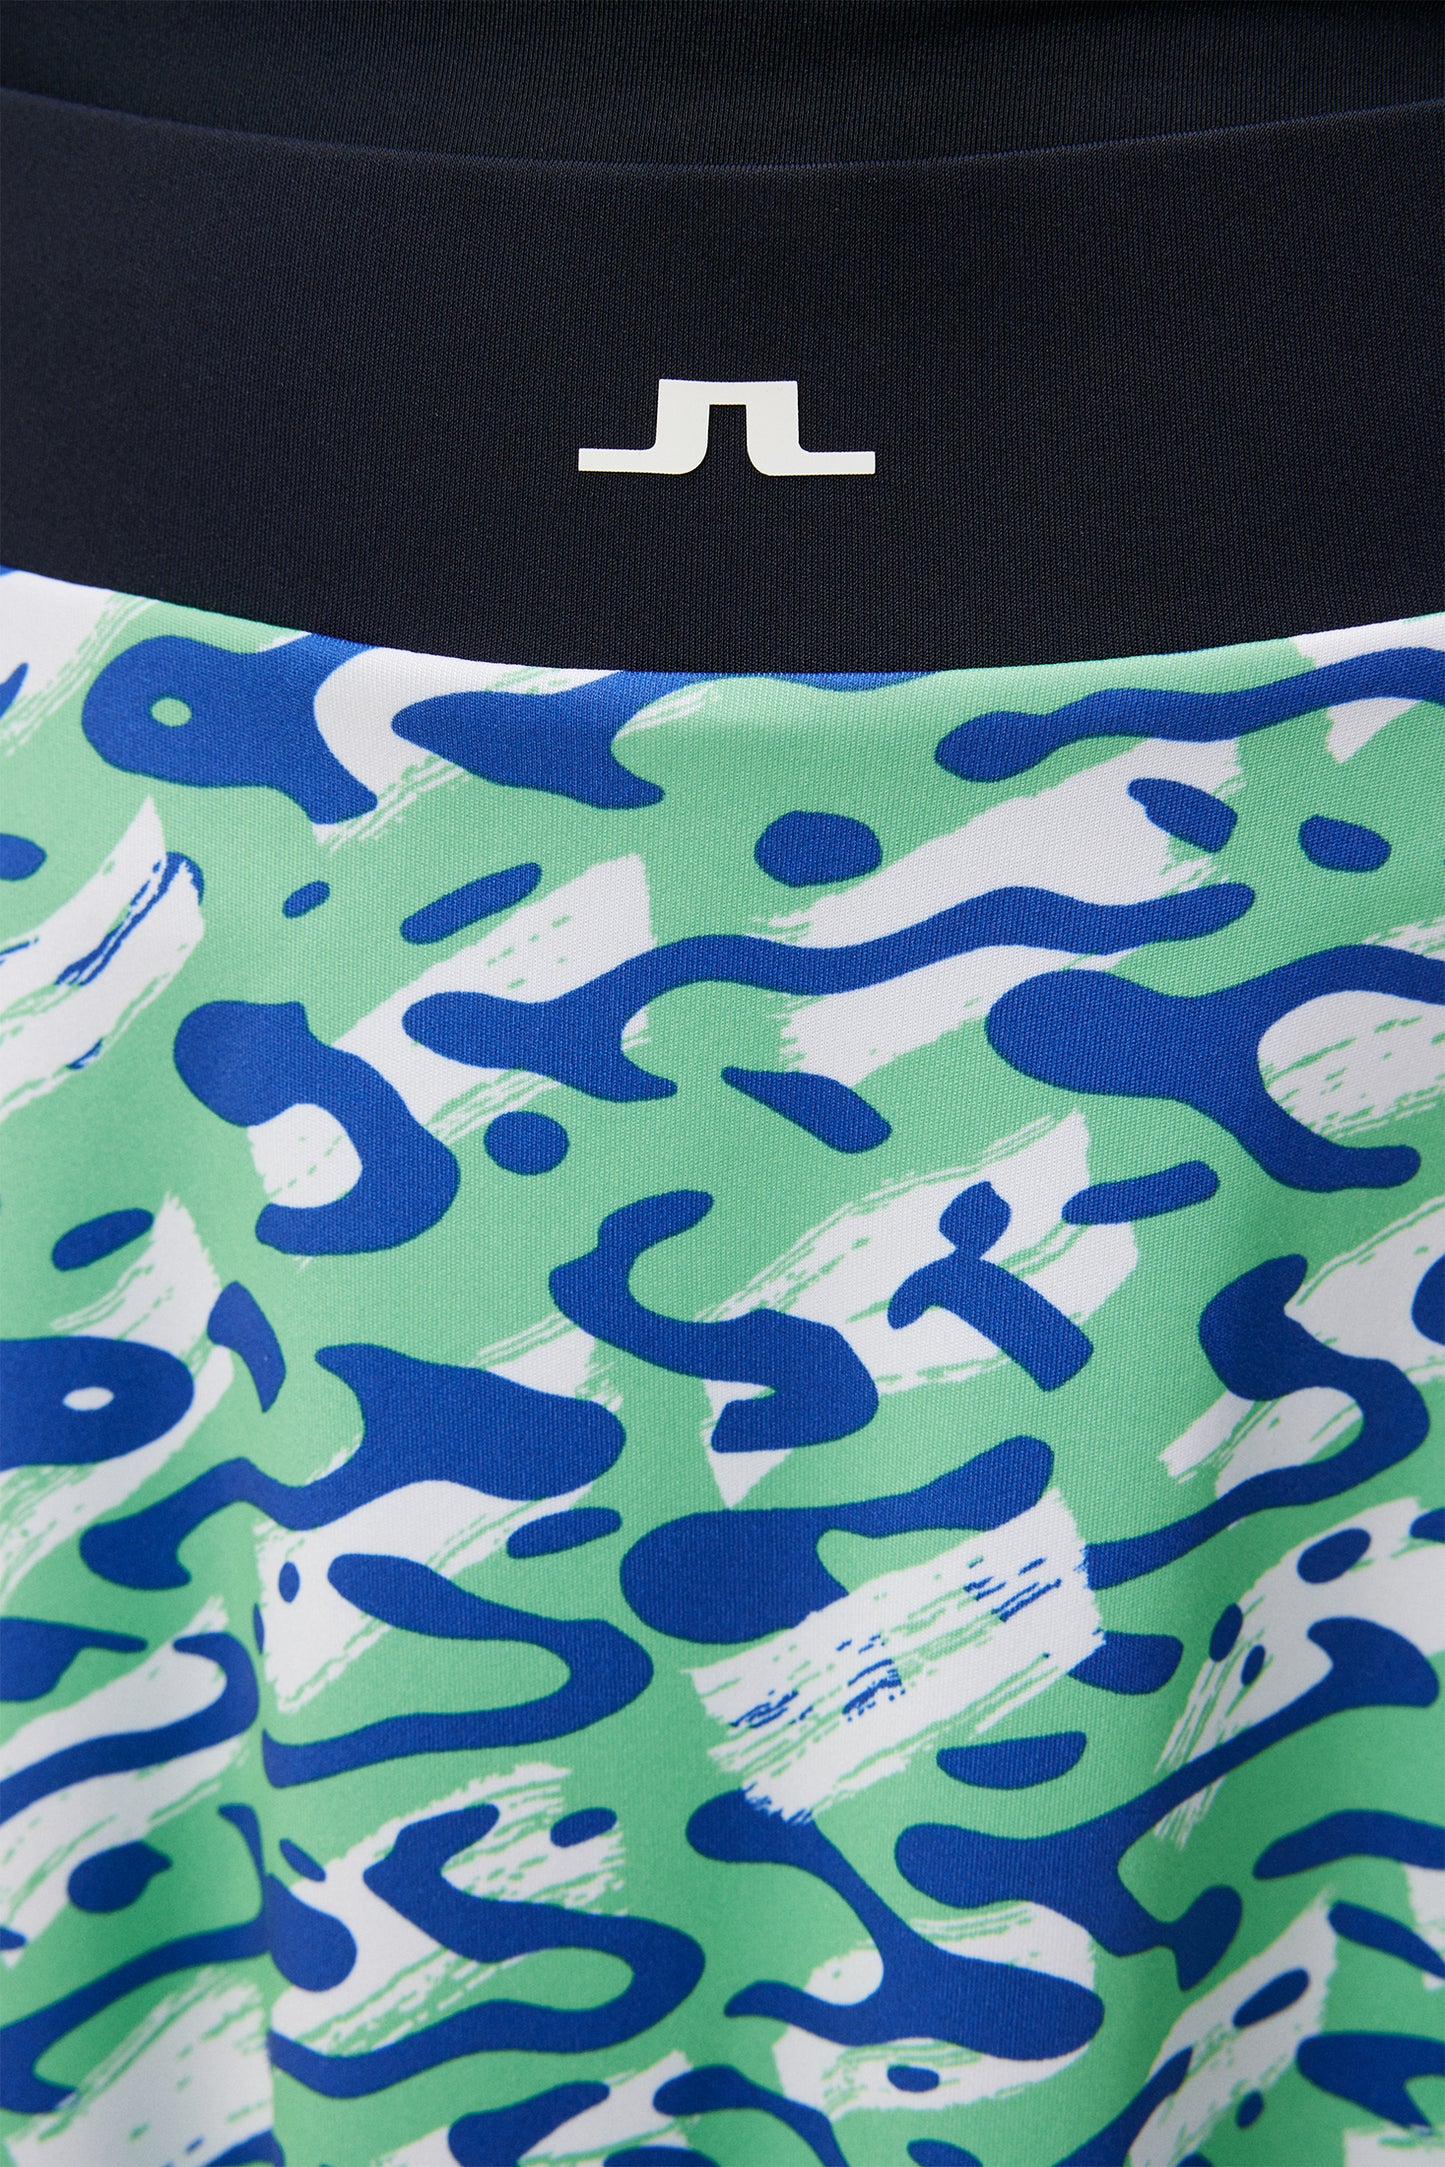 Jenny Print Skirt / Caldera Jade Cream – J.Lindeberg